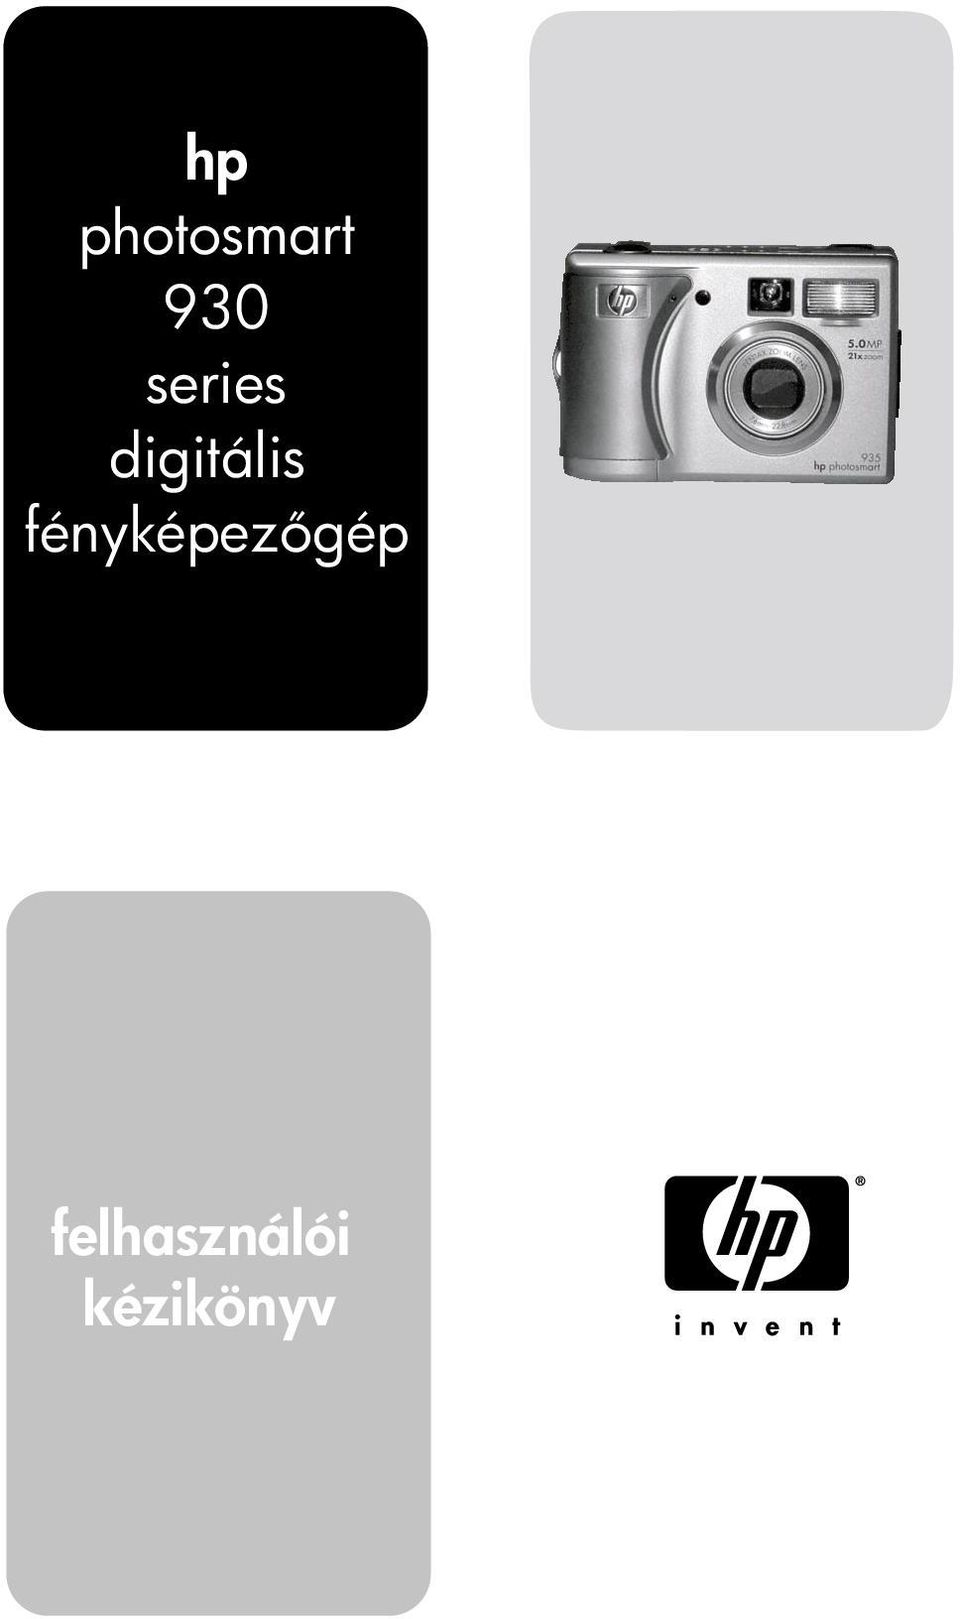 hp photosmart 930 series digitális fényképez gép - PDF Free Download